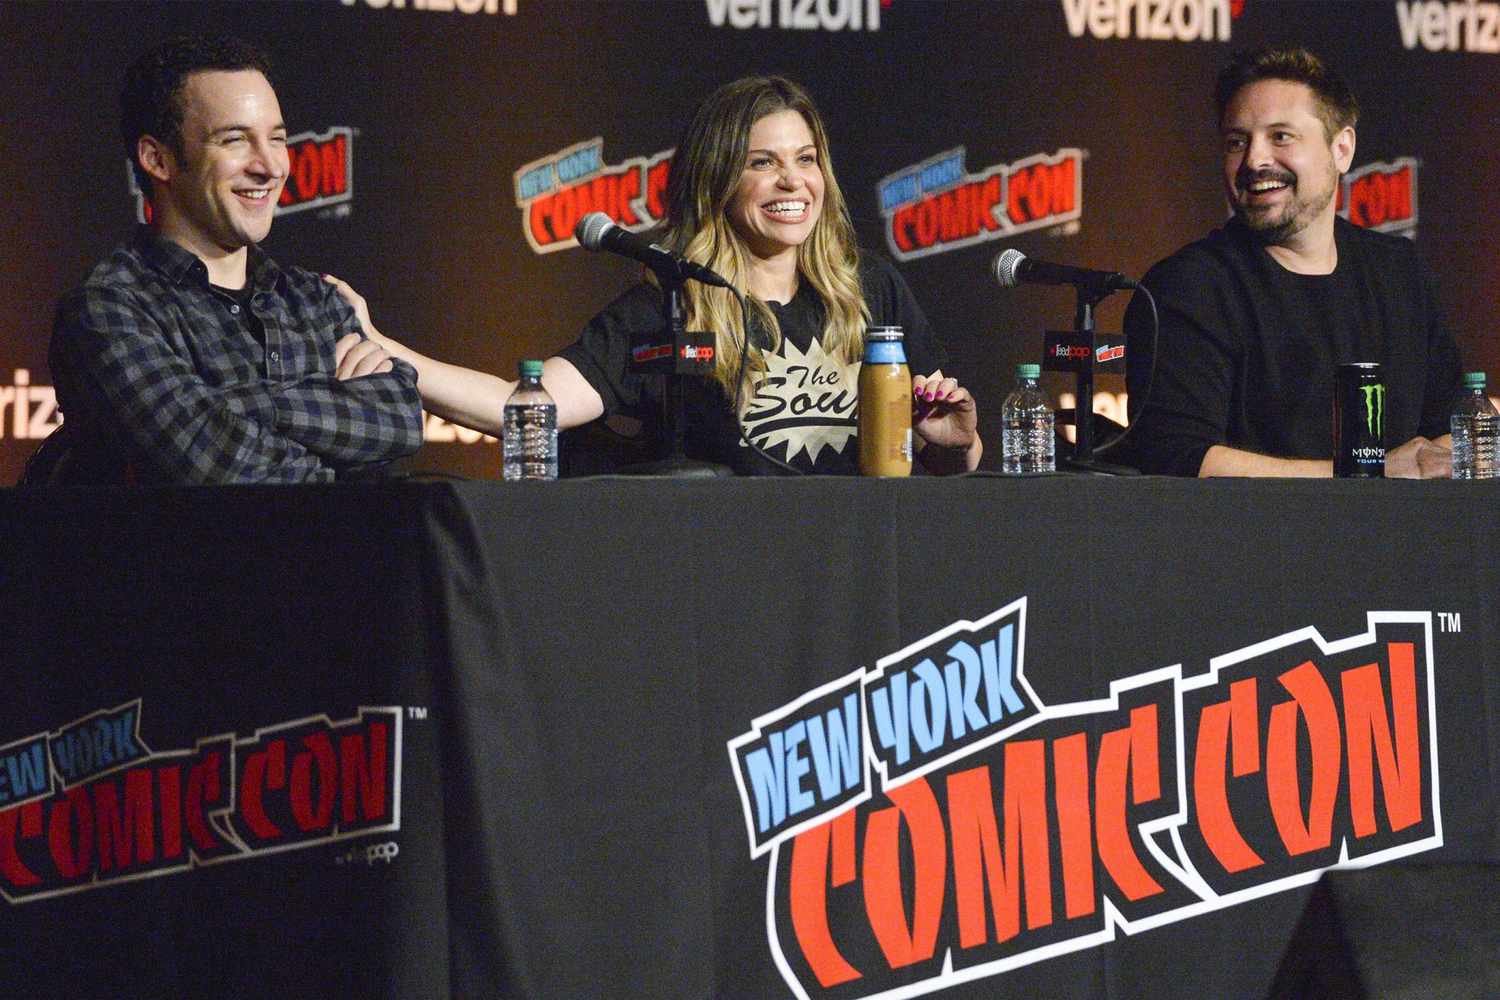 Overeenkomstig Centimeter schotel Boy Meets World cast reunites for anniversary at New York Comic Con | EW.com